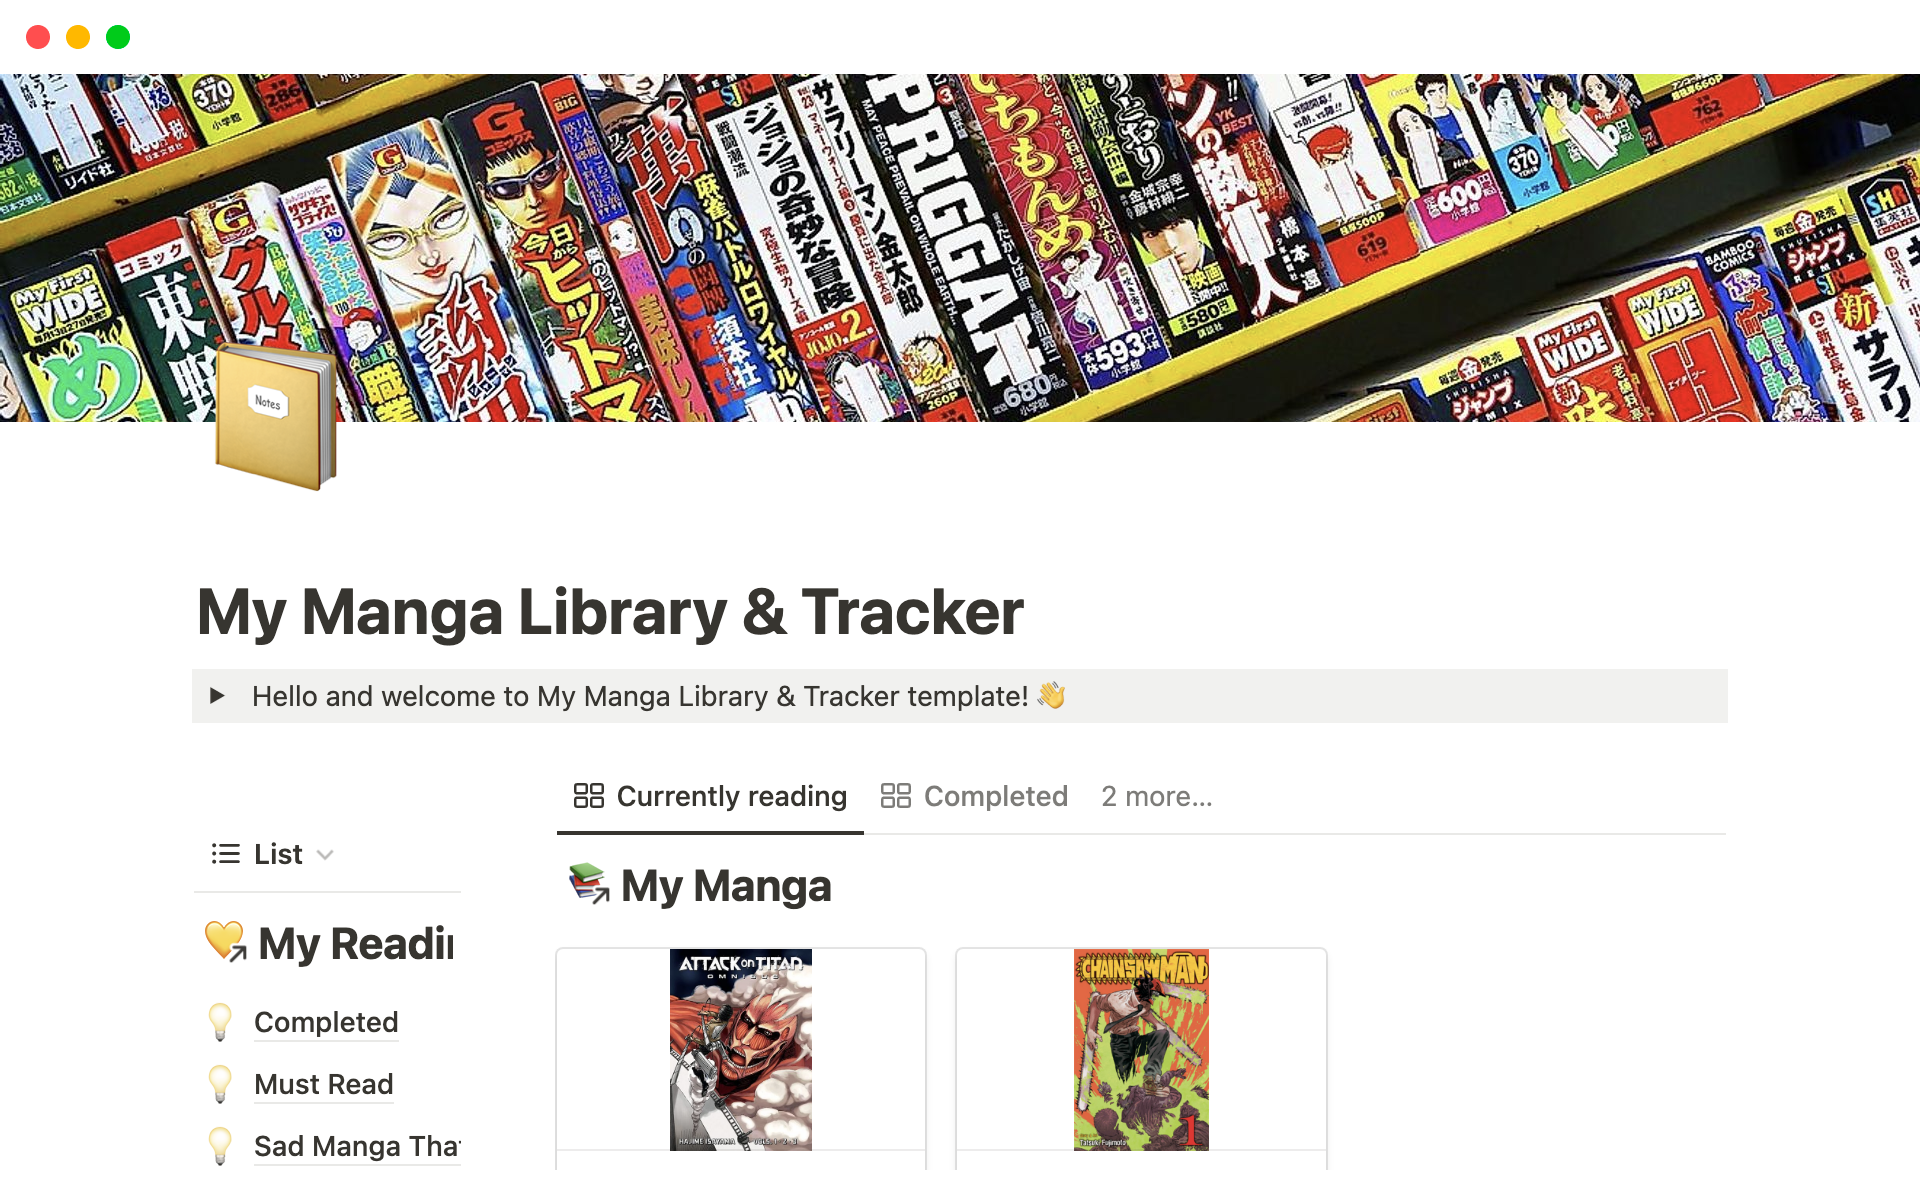 My Manga Library & Tracker님의 템플릿 미리보기